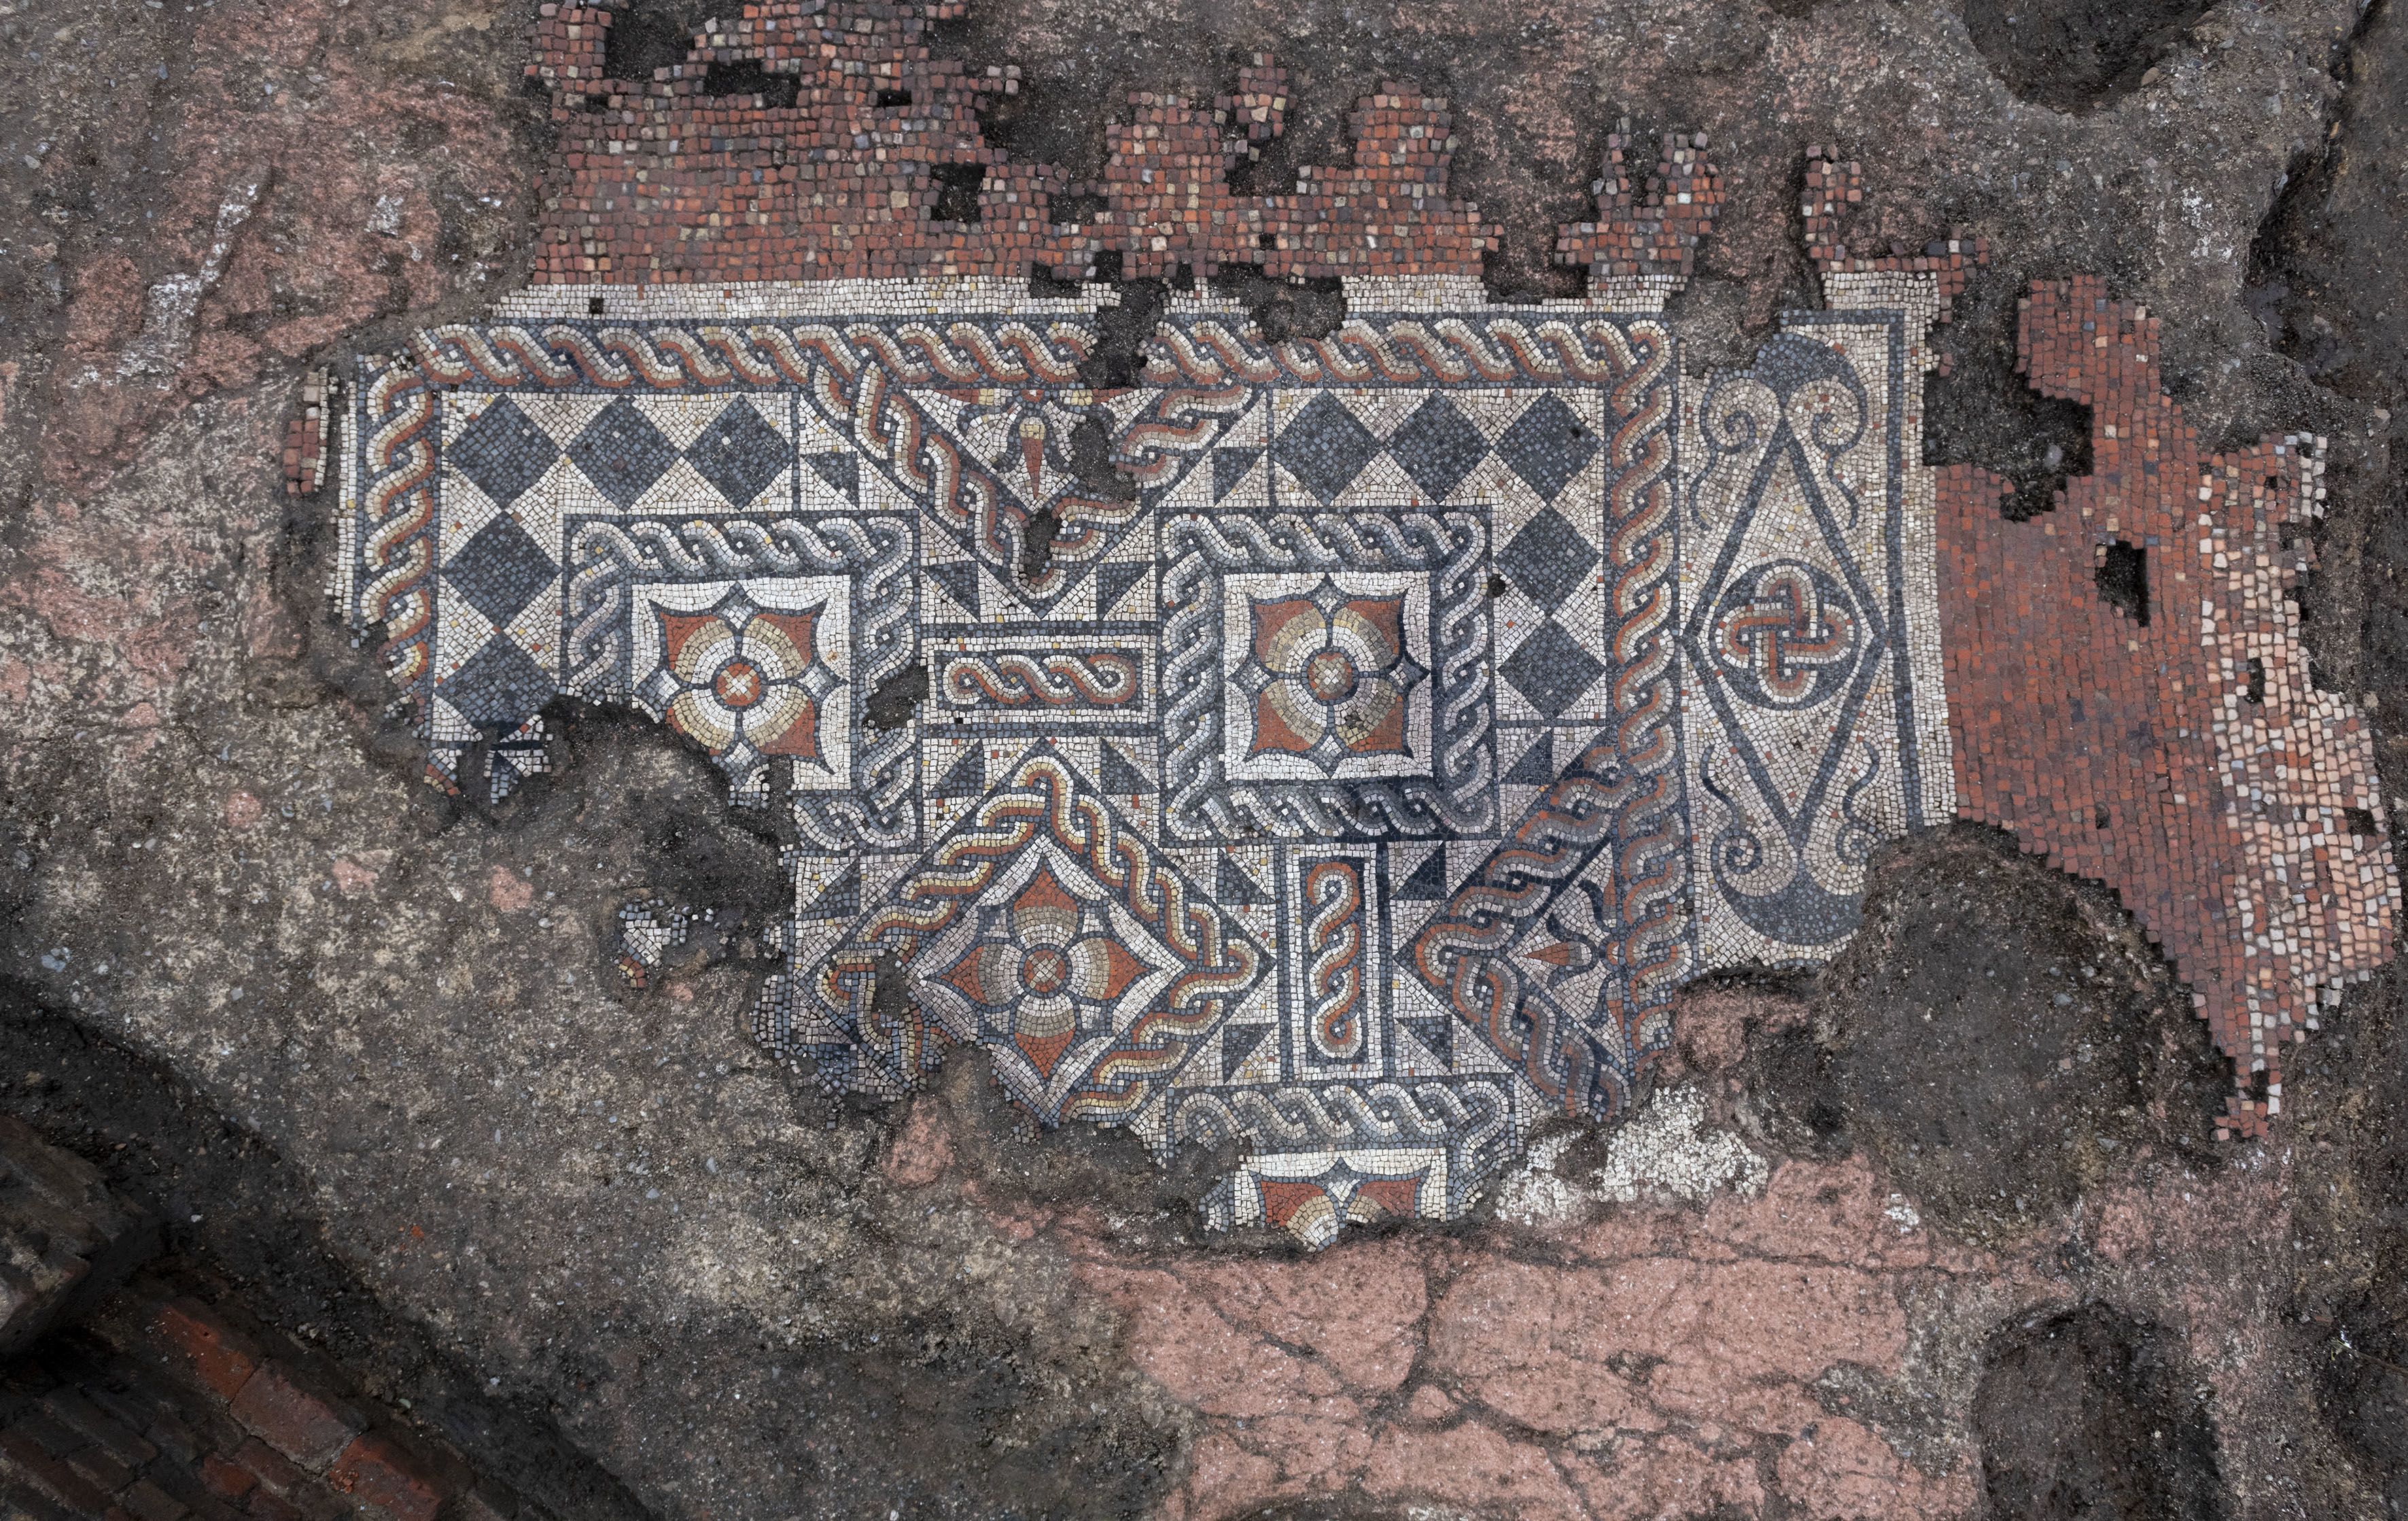 https://media.cnn.com/api/v1/images/stellar/prod/220223141424-03-roman-mosaic-london-archaeology-discovery.jpg?q=h_2238,w_3543,x_0,y_0